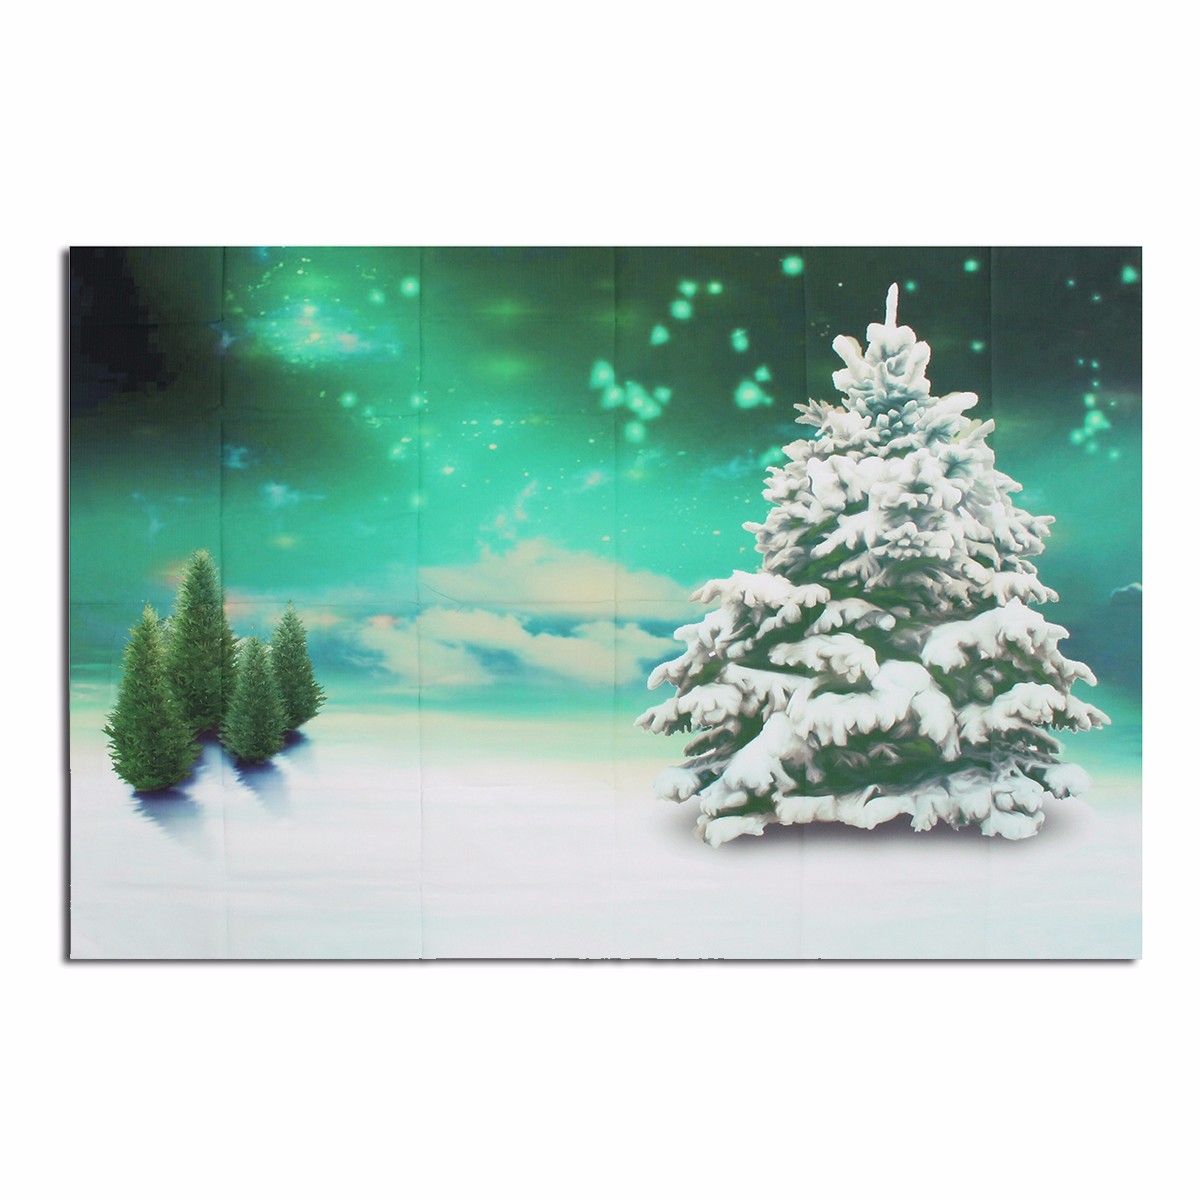 5x7FT-Chrismas-Tree-Snow-Vinyl-Backdrop-Photography-Prop-Studio-Photo-Background-1092120-2